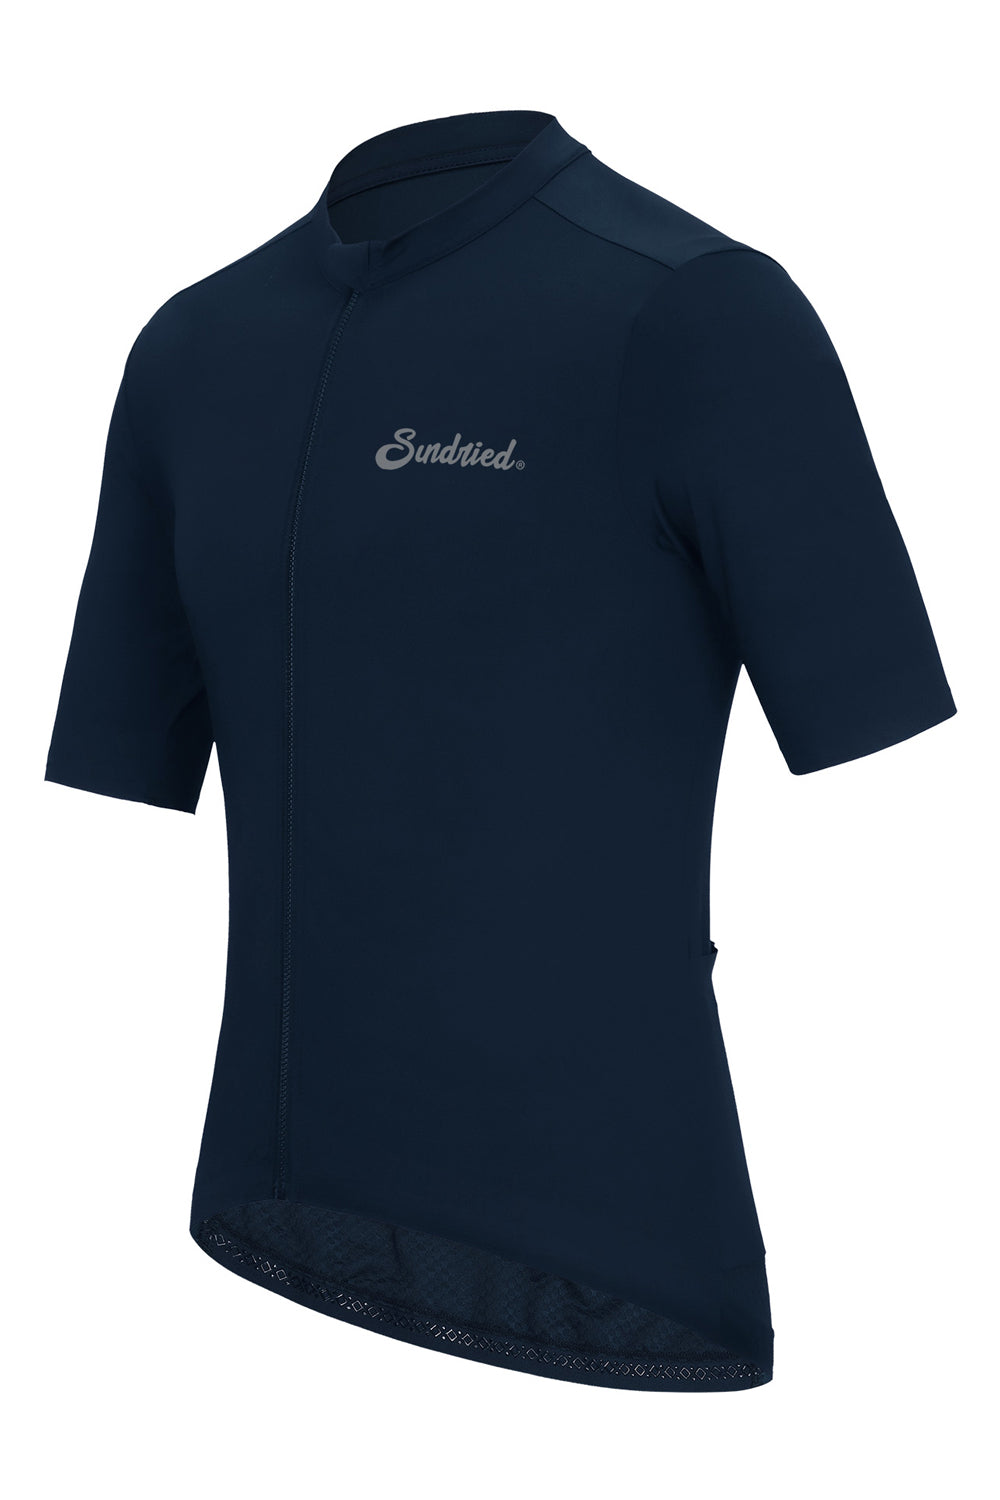 Sundried Sport Pianura Men's Navy Short Sleeve Cycle Jersey Short Sleeve Jersey Activewear